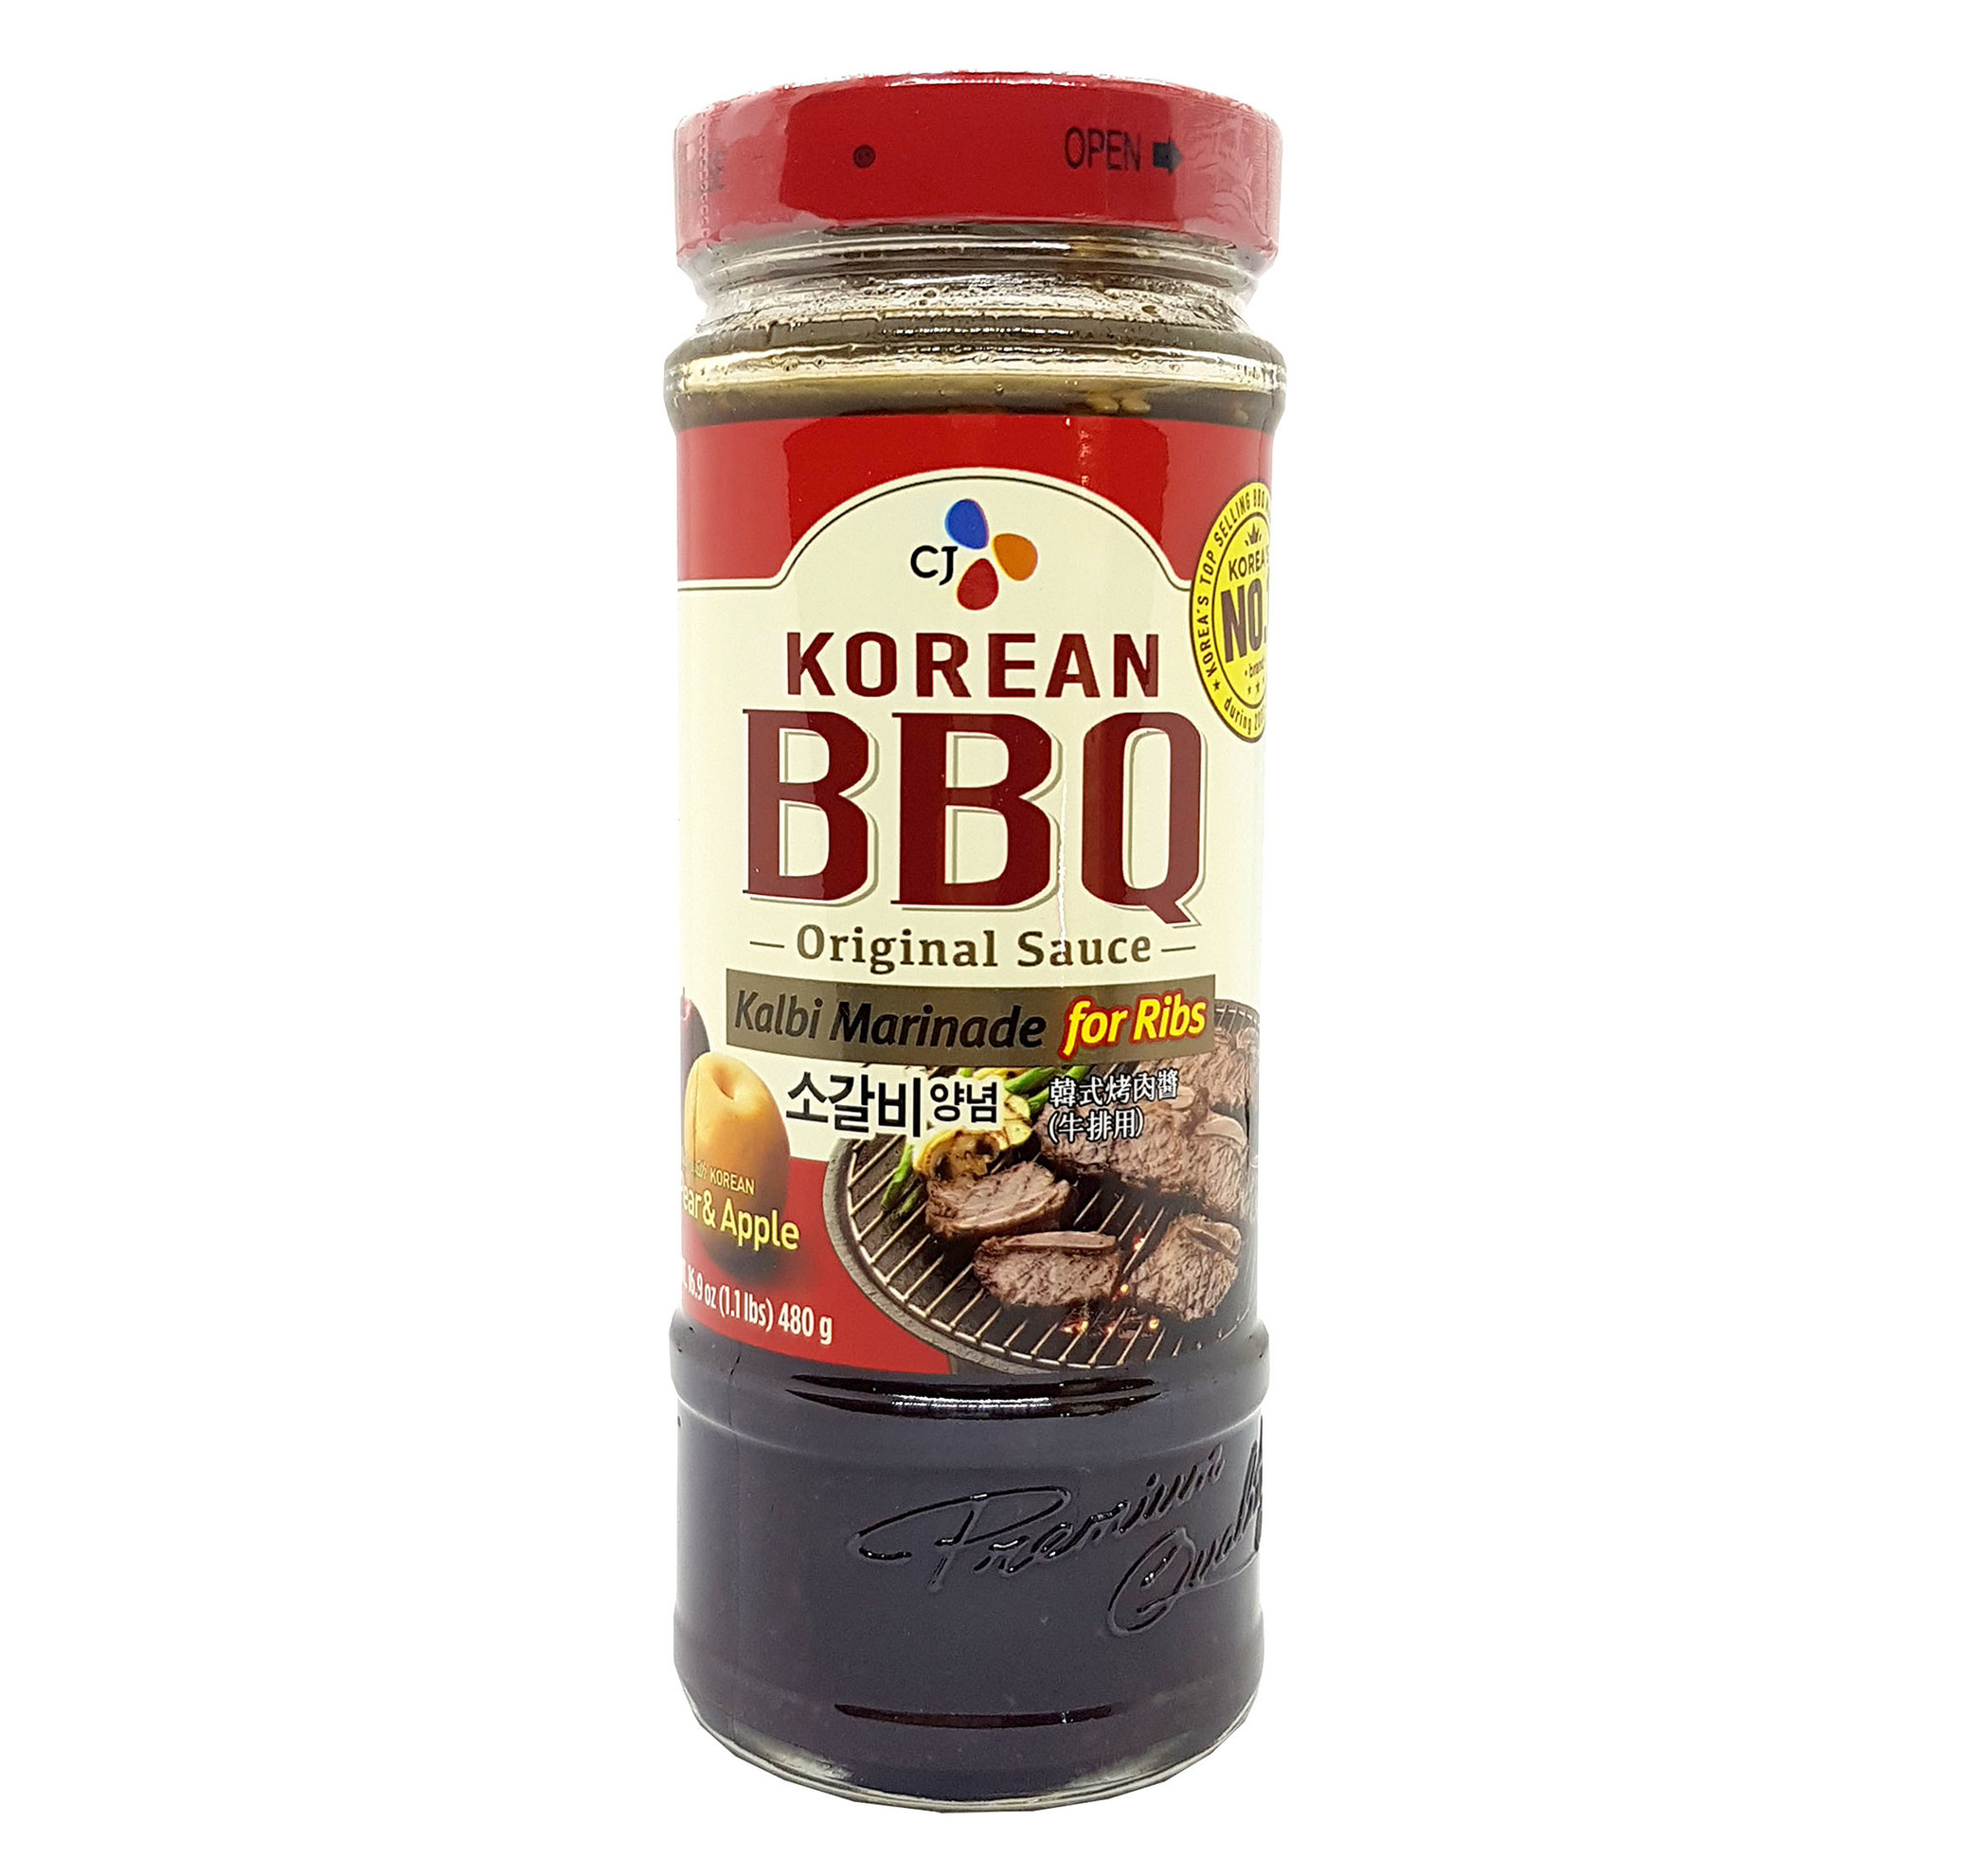 Korean BBQ kalbi marinade for ribs